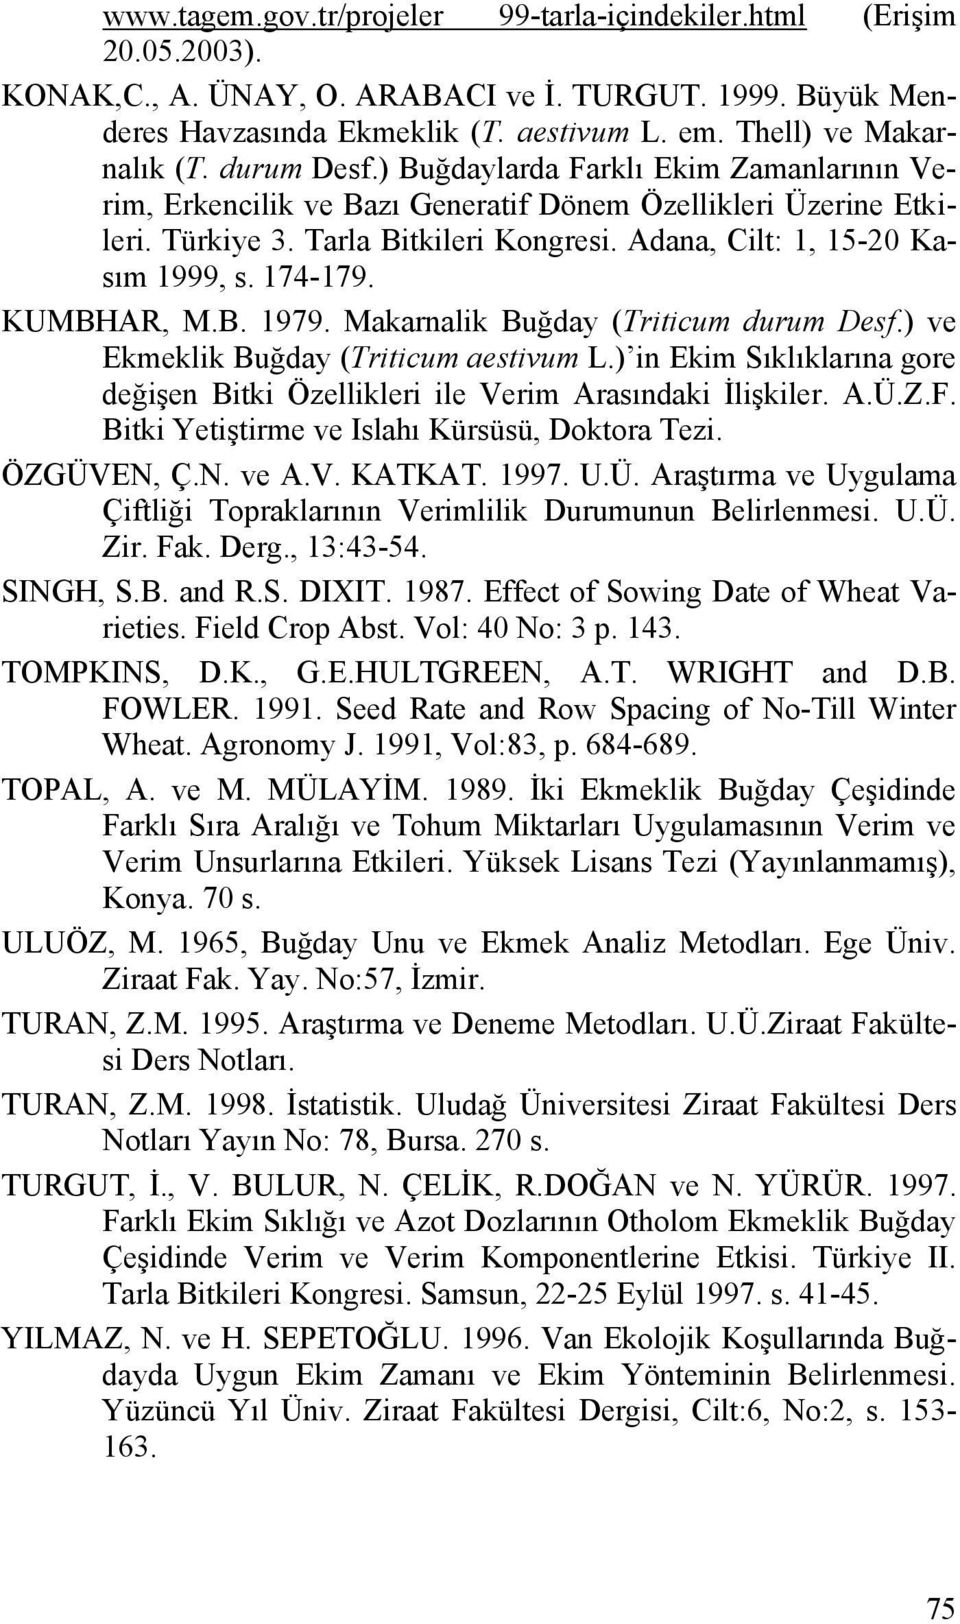 Adana, Cilt: 1, 15-20 Kasım 1999, s. 174-179. KUMBHAR, M.B. 1979. Makarnalik Buğday (Triticum durum Desf.) ve Ekmeklik Buğday (Triticum aestivum L.